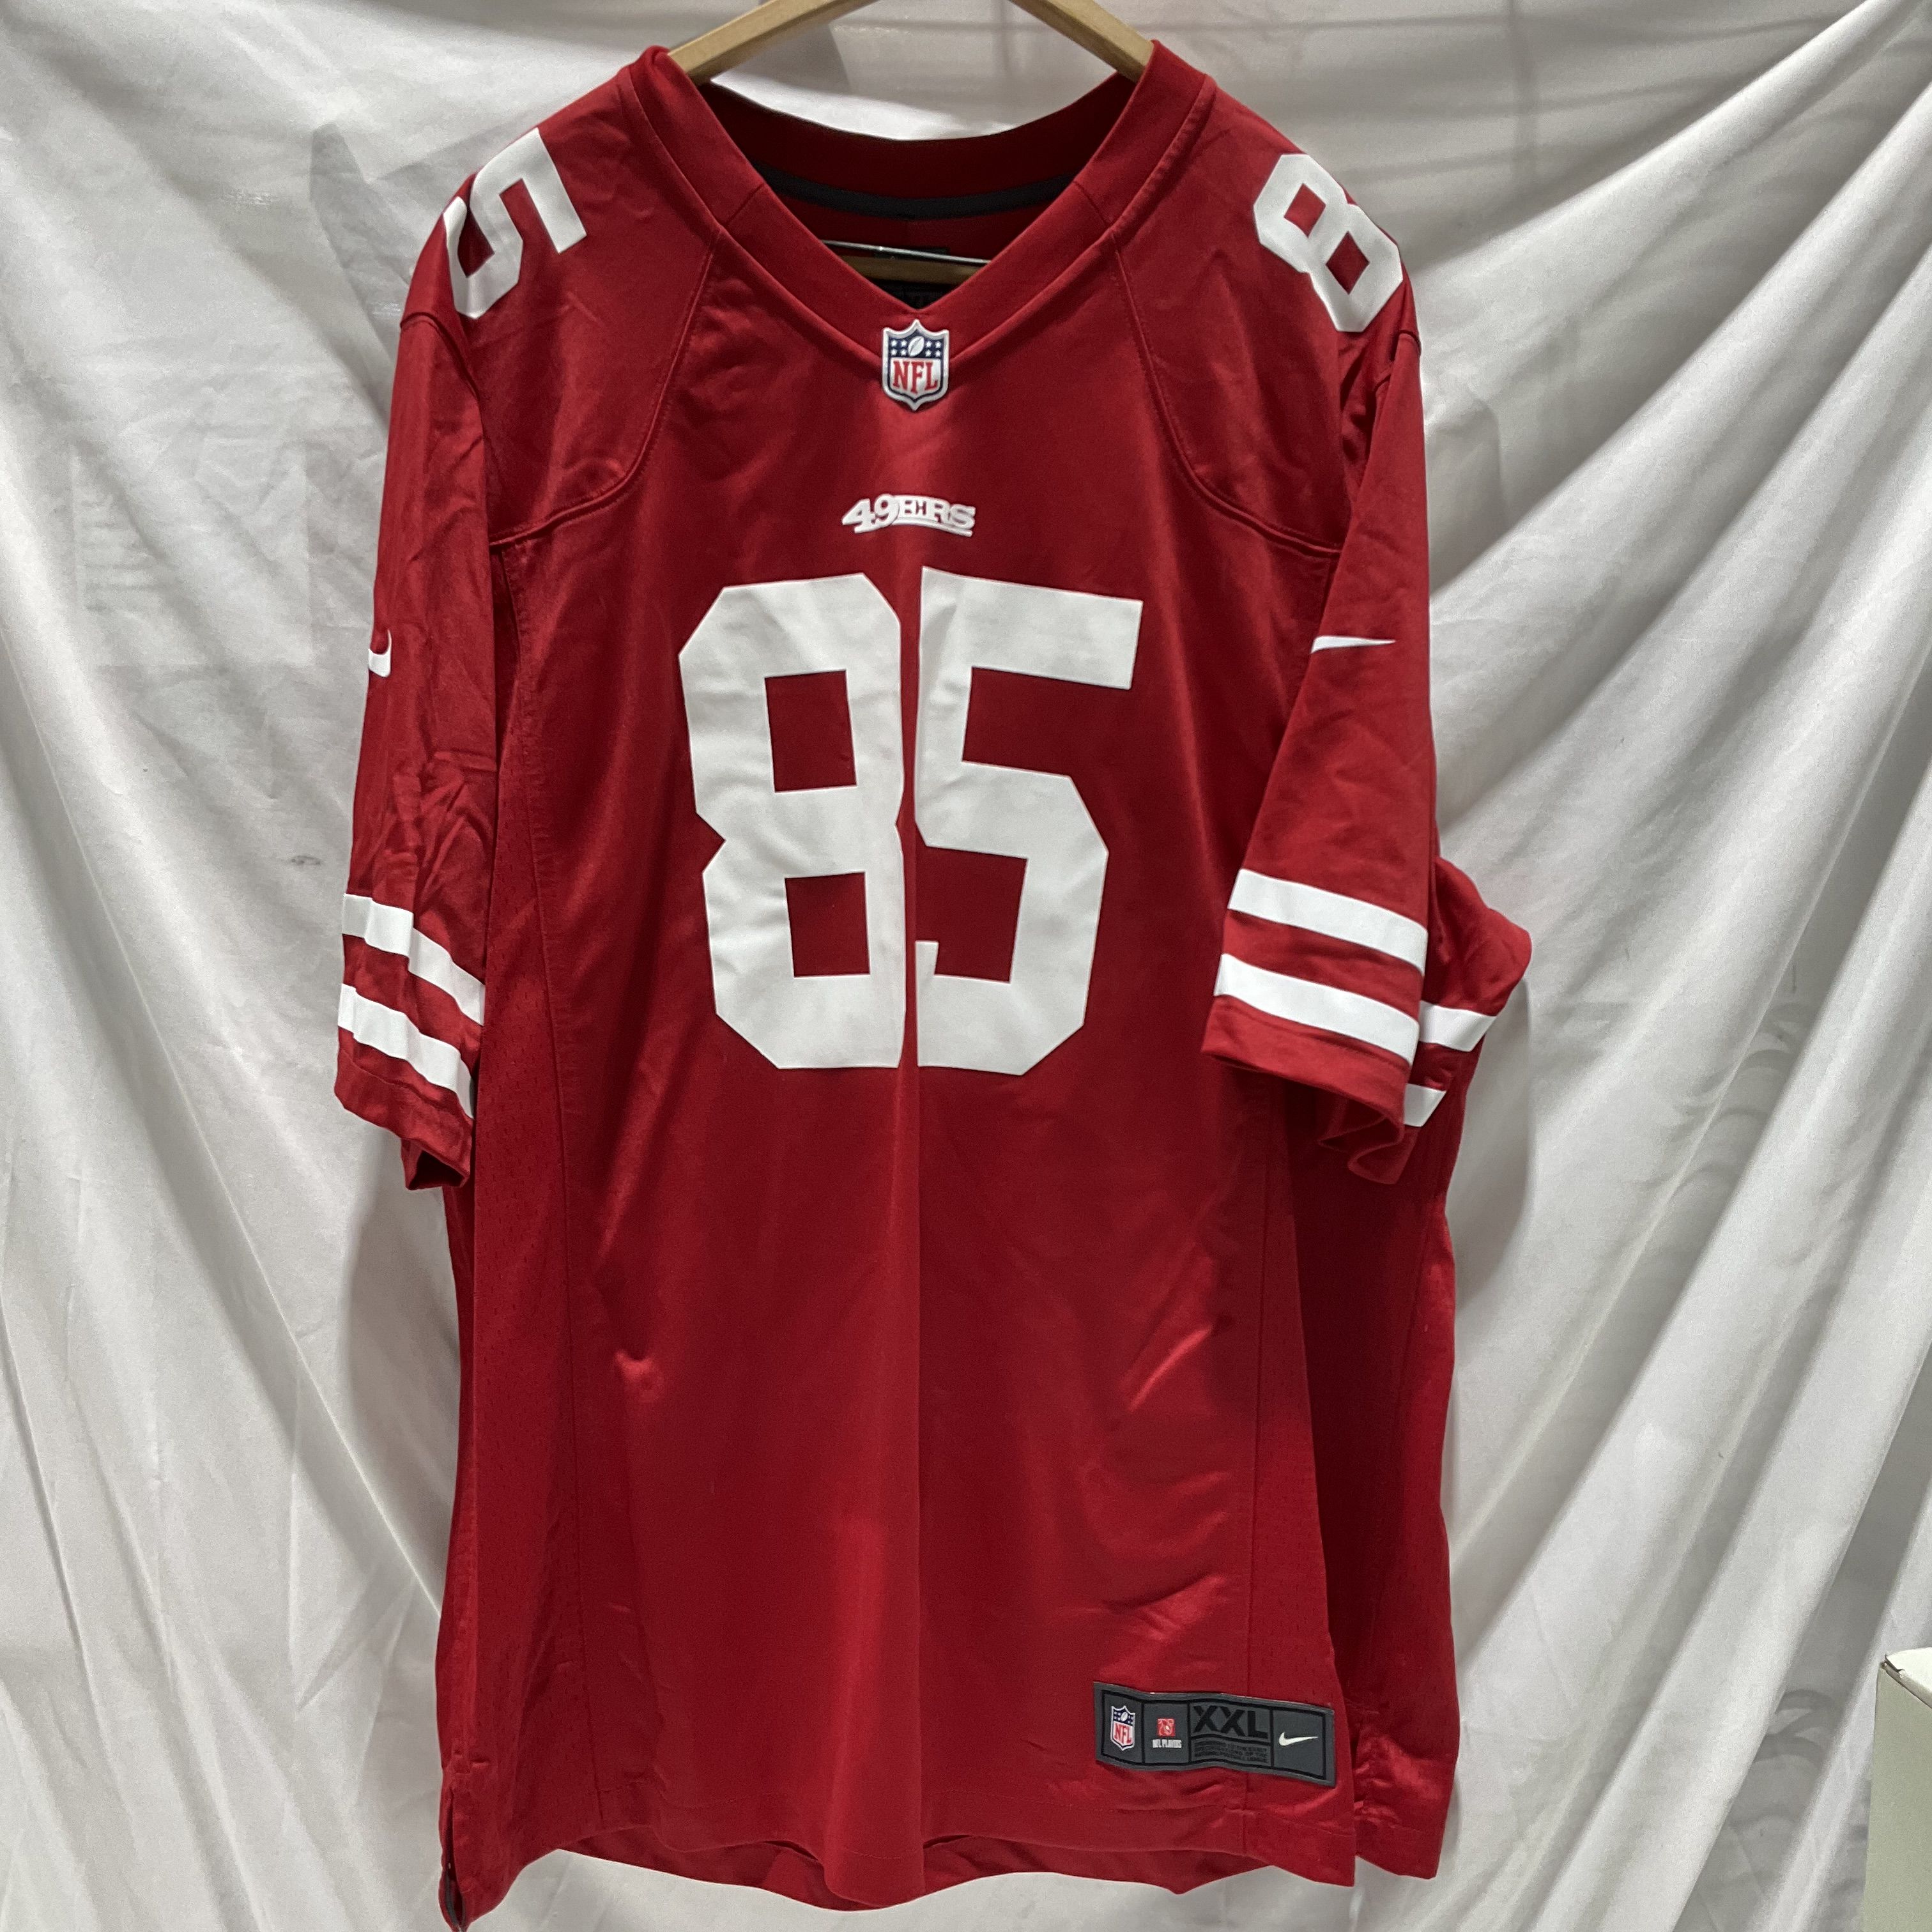 Buy the 49ers Jersey #85 Kittle Sz XXL